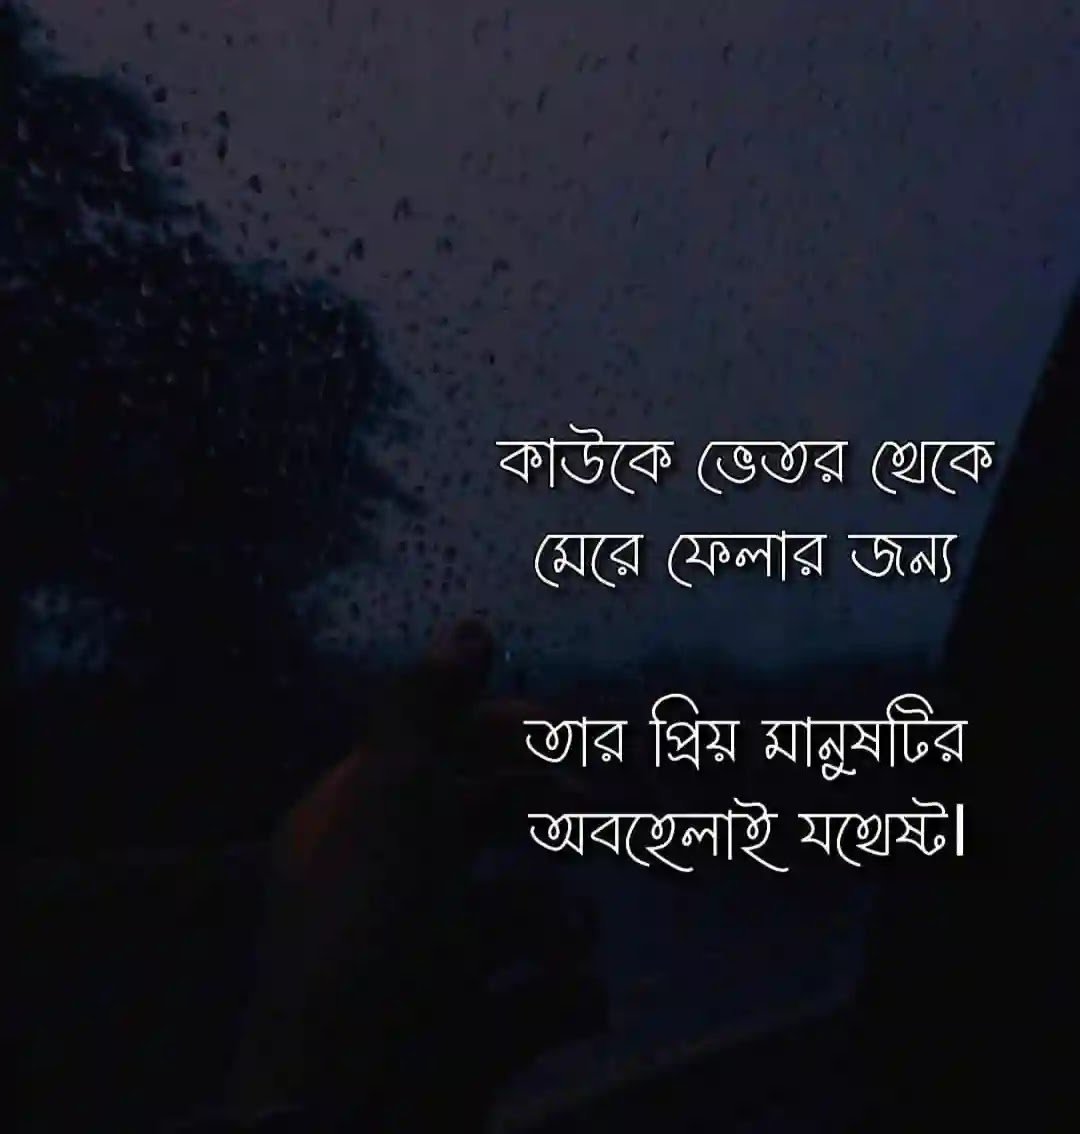 bangla quotes -photos Free background image in precap